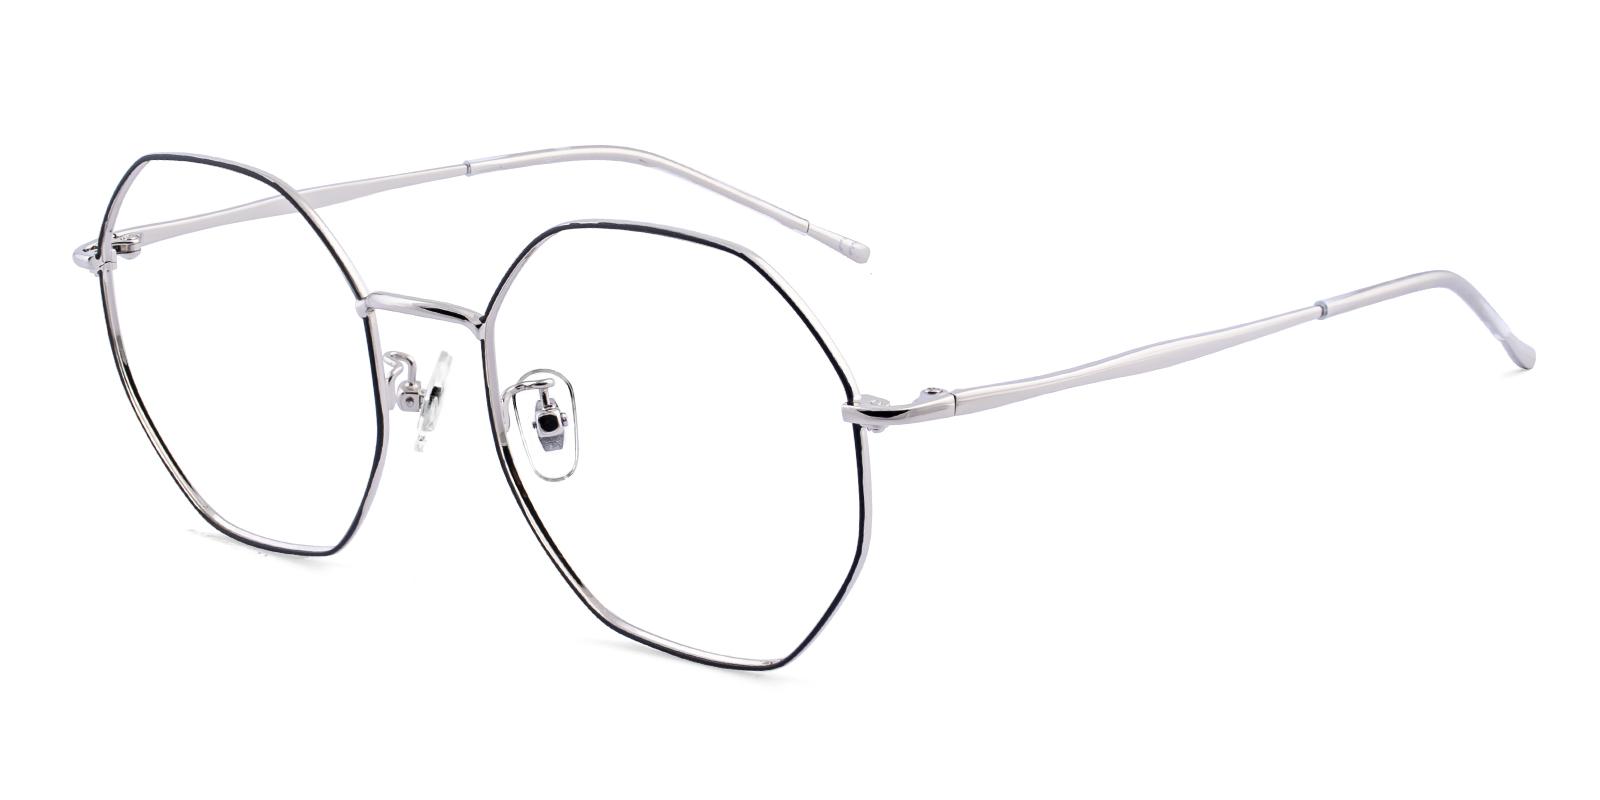 Salieur Black Metal Eyeglasses , NosePads Frames from ABBE Glasses